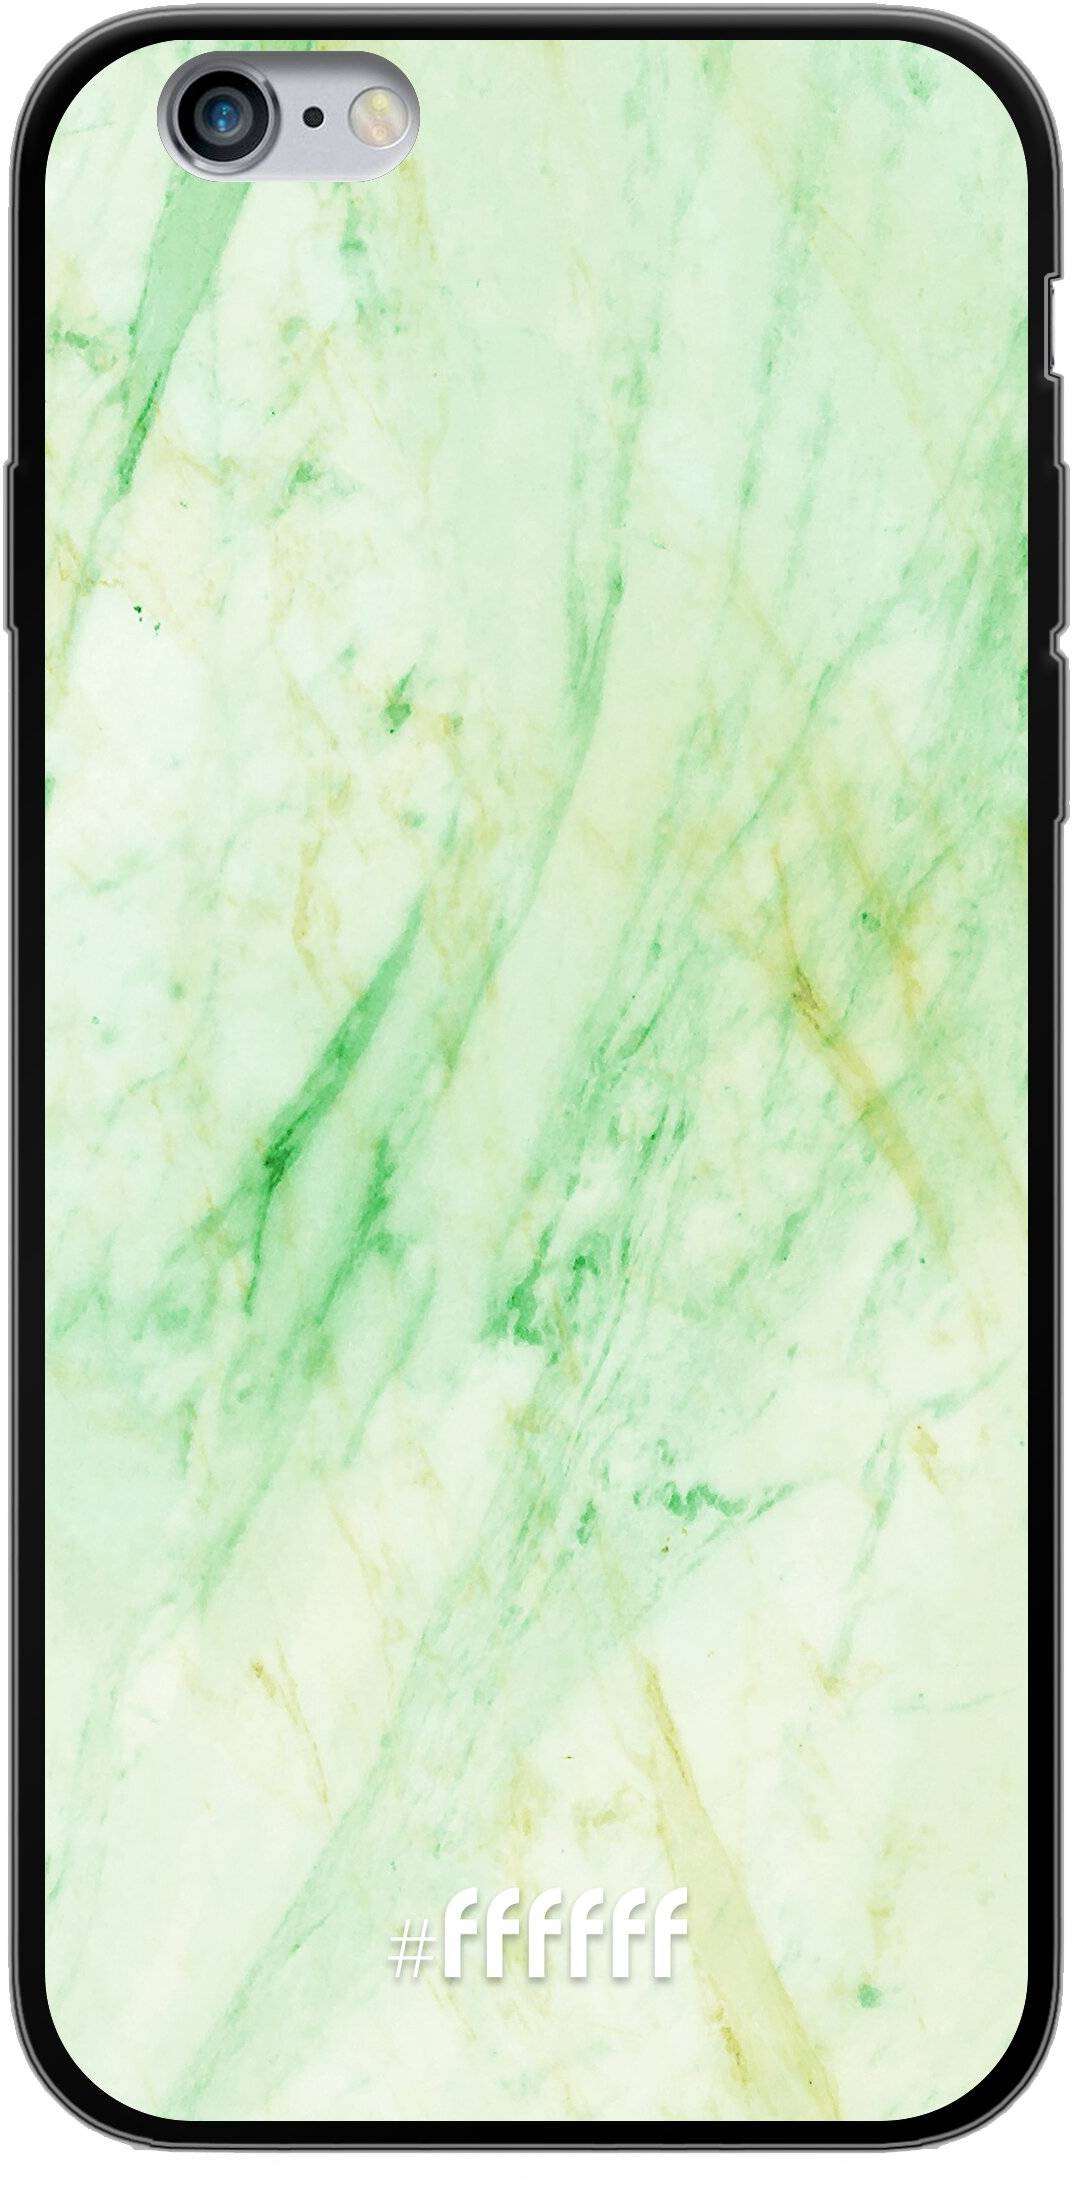 Pistachio Marble iPhone 6